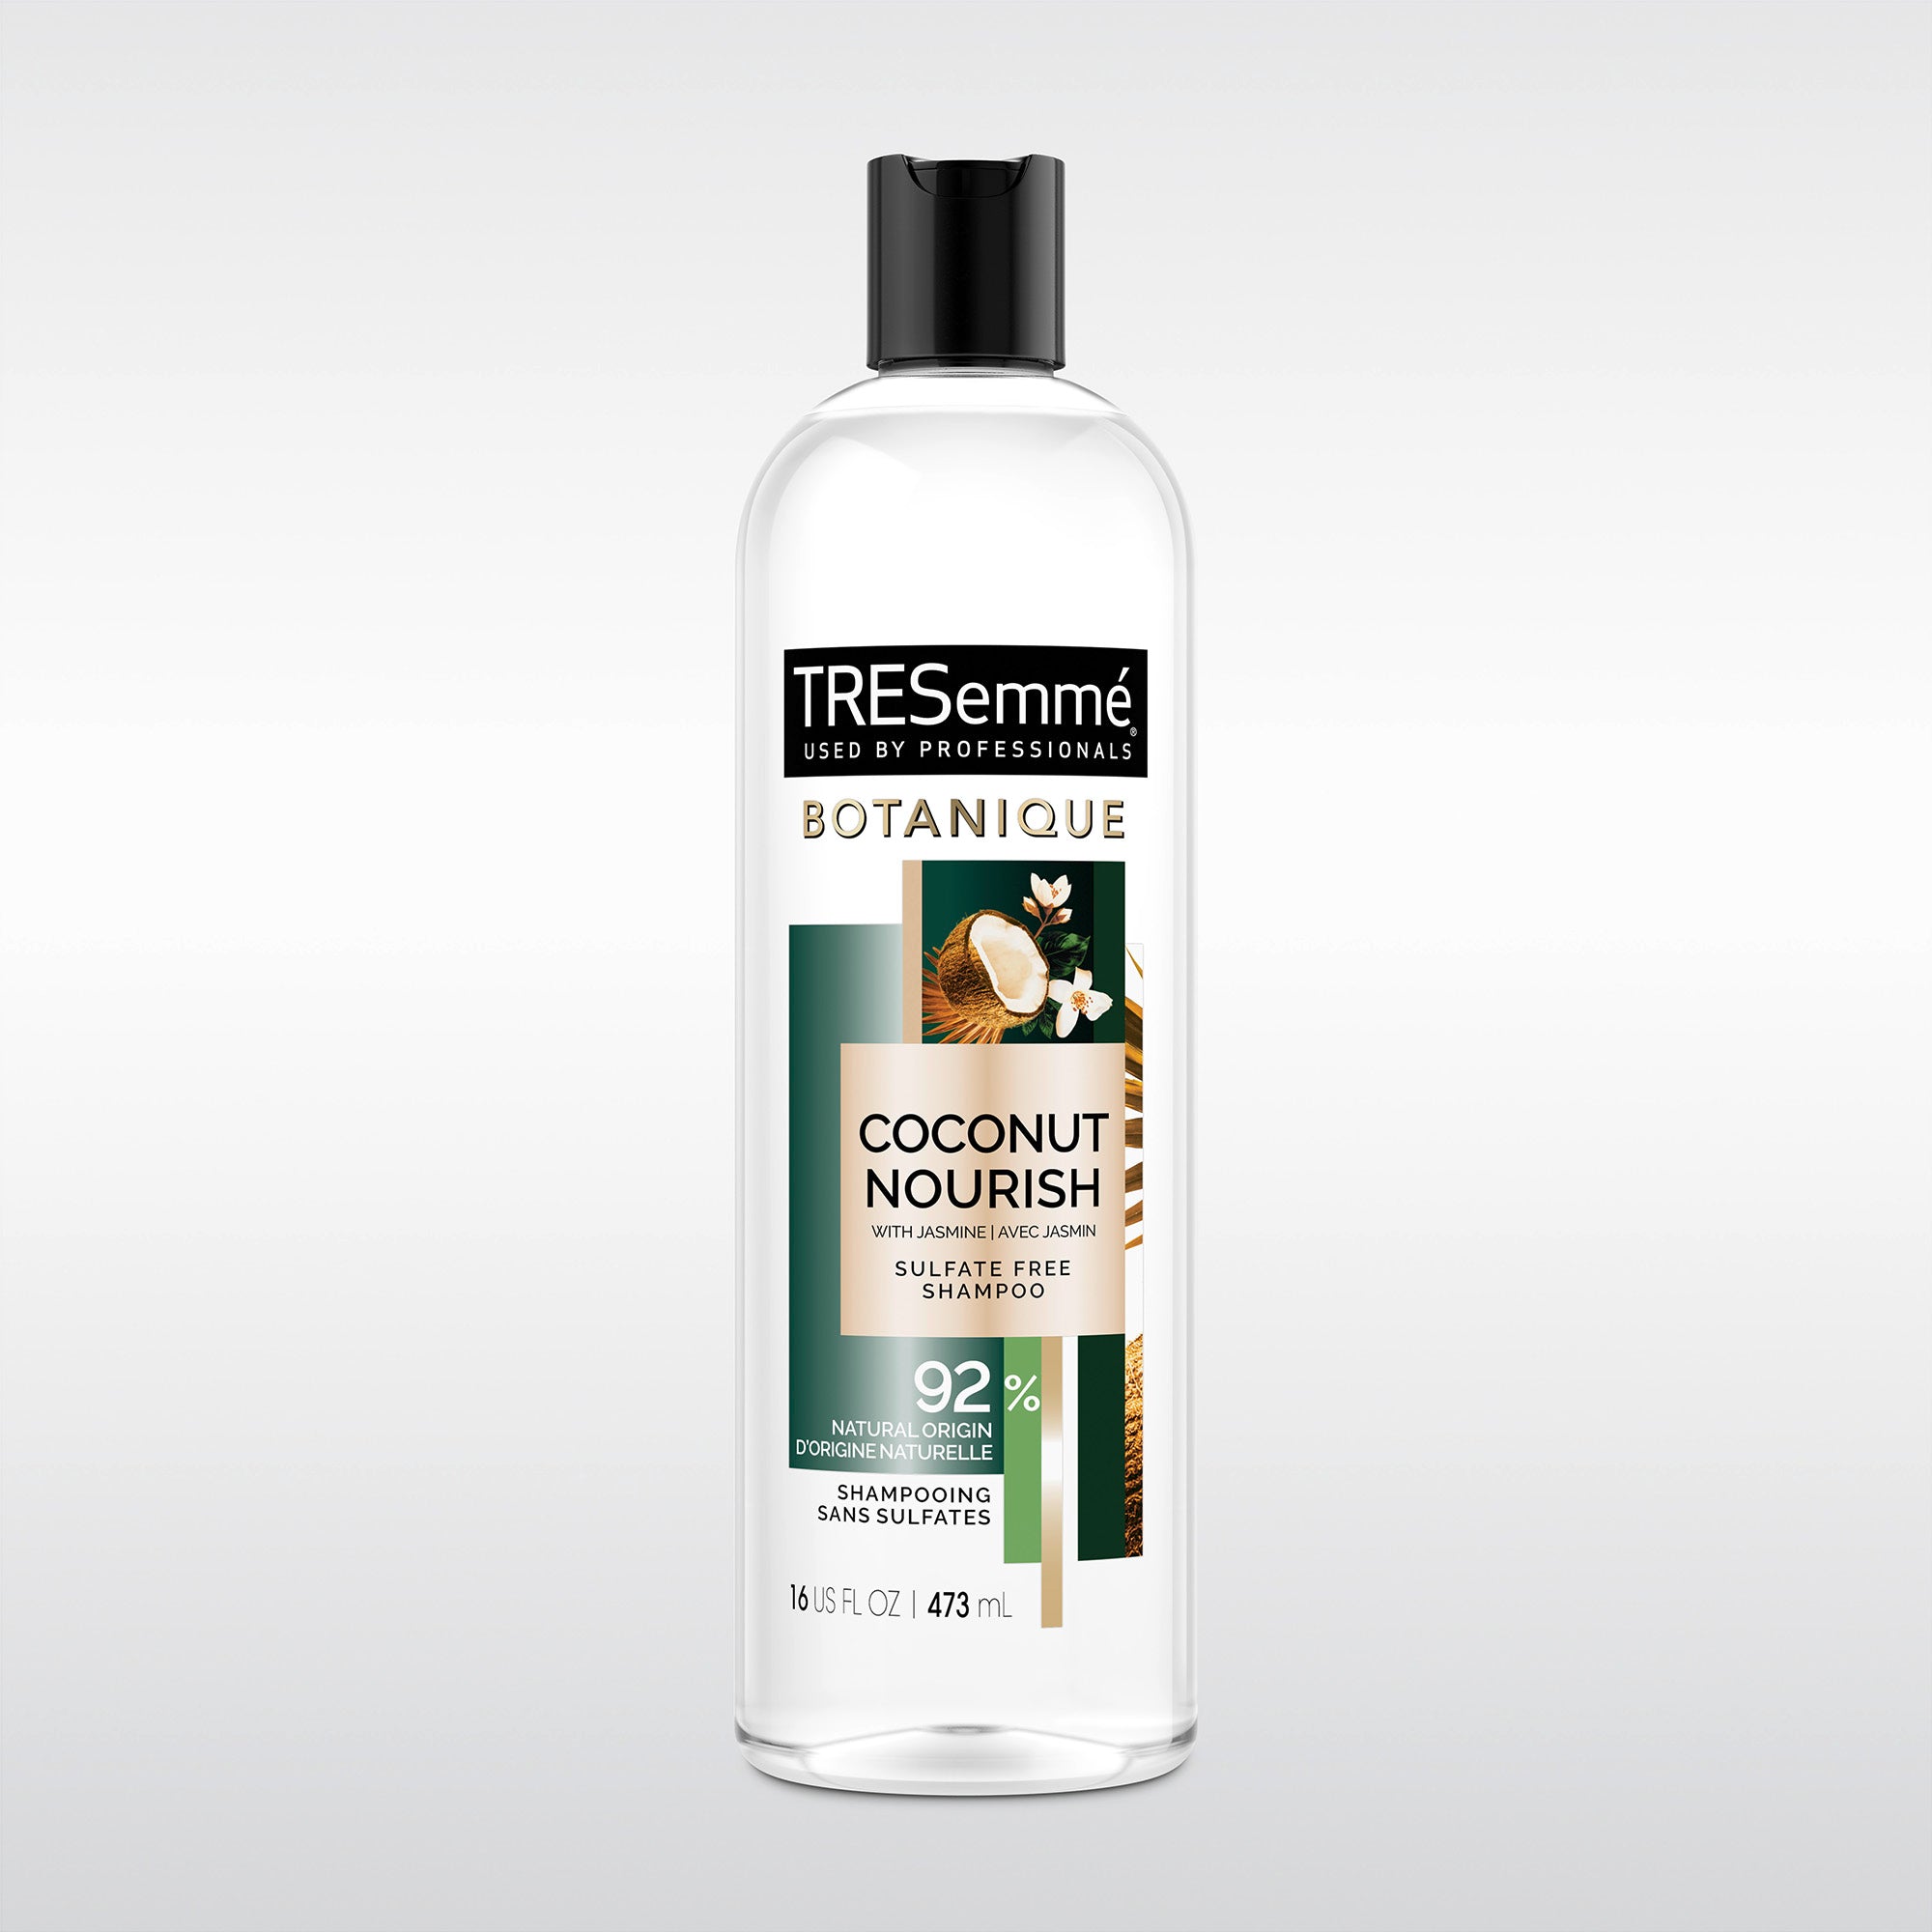 Tresemme Botanique Coconut Nourish 92% Shampoo 473ml